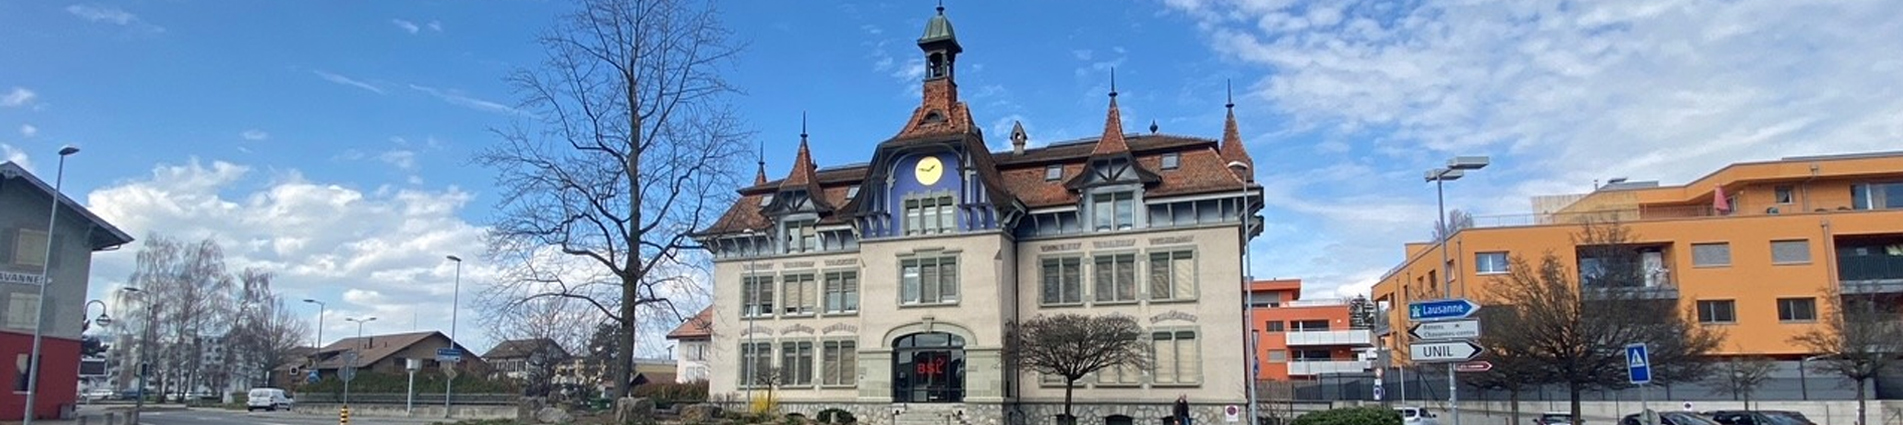 Business School Lausanne